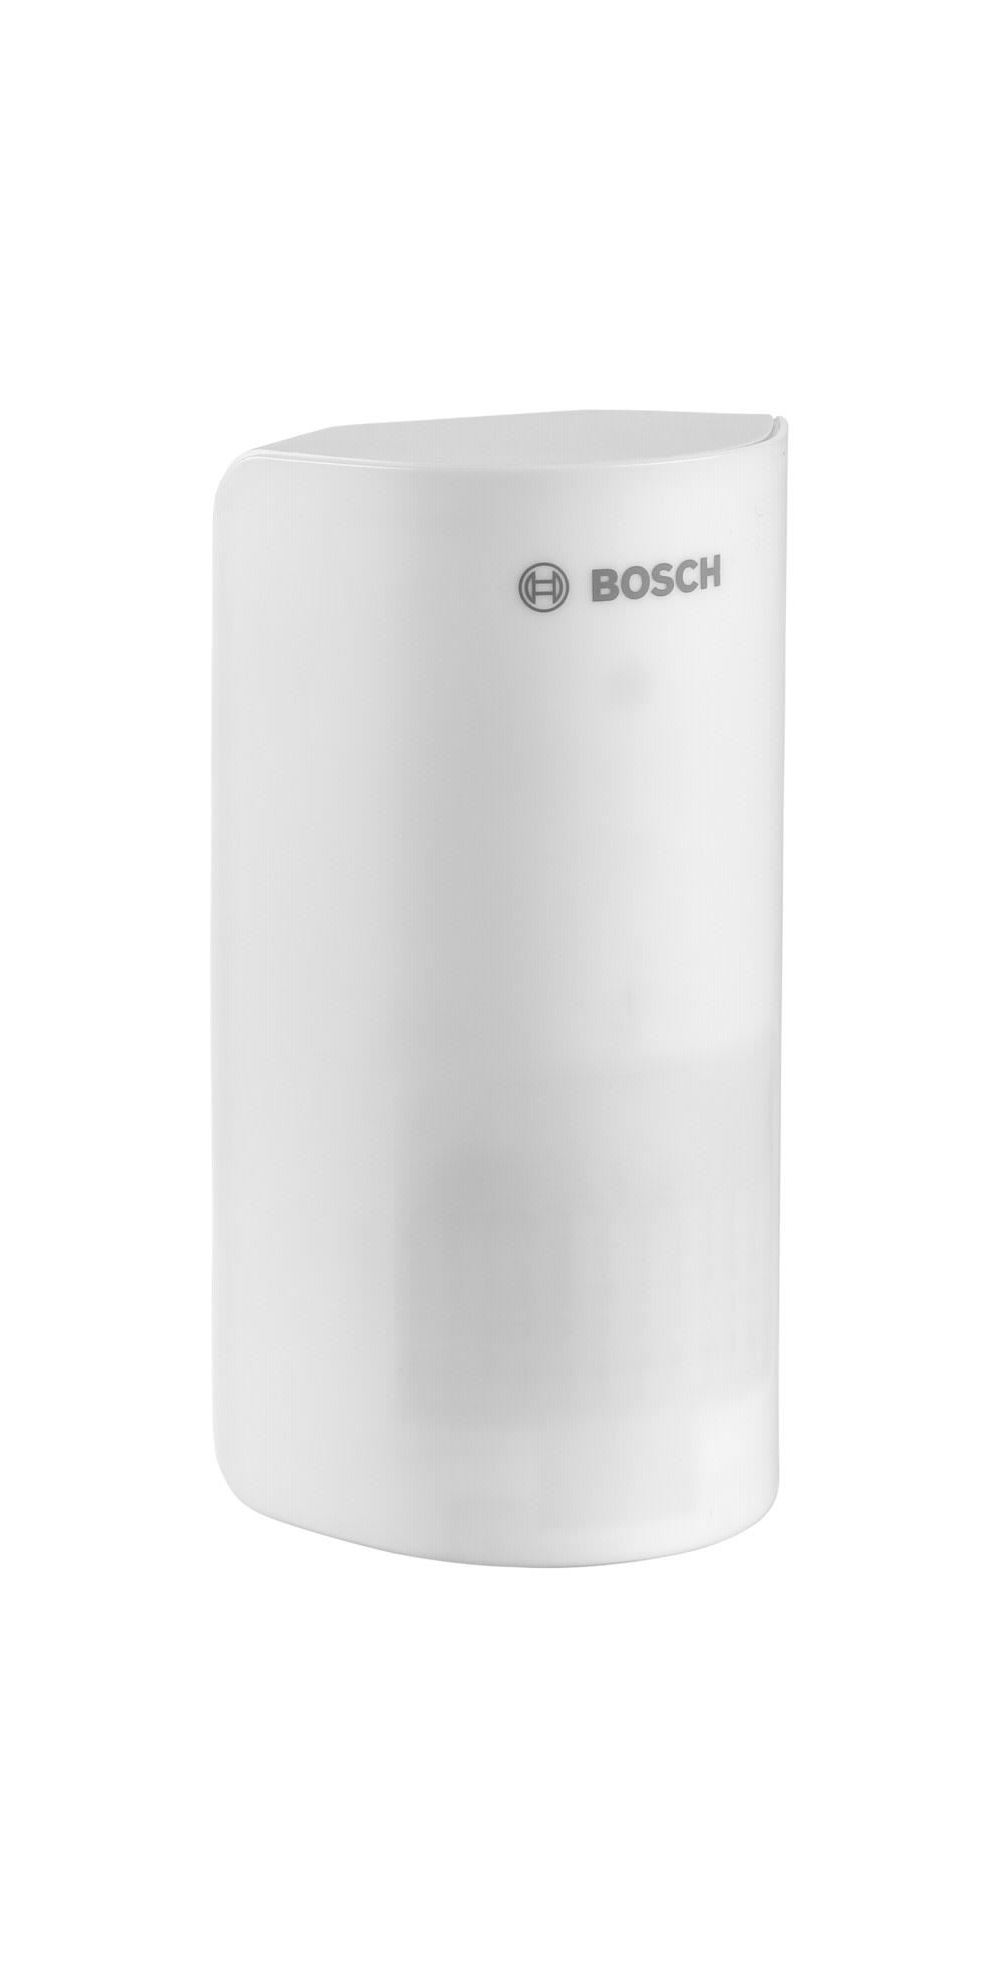 Bosch Smart Home Bewegungsmelder mit Temperatursensor